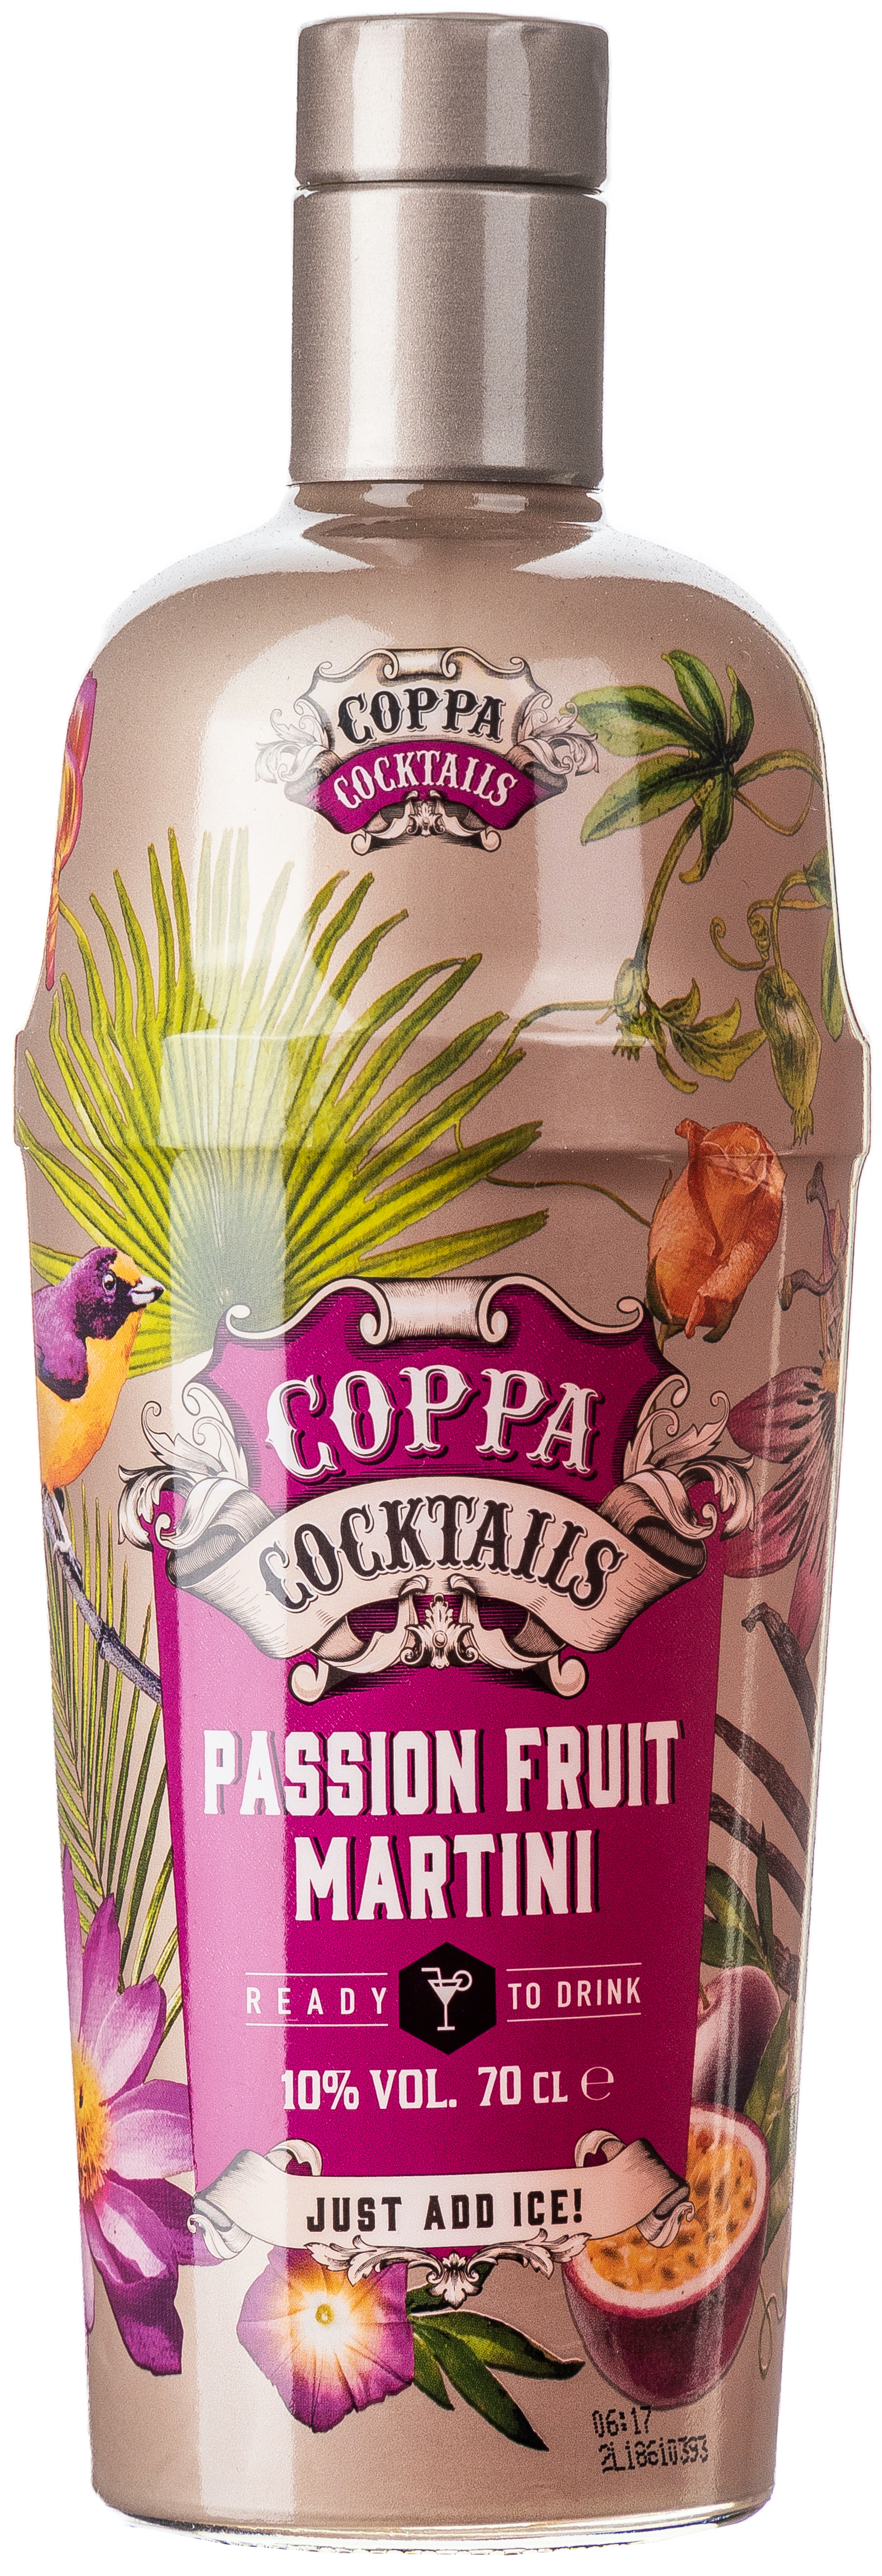 Coppa Cocktails Passion Fruit Martini 10% vol. 0,7 L